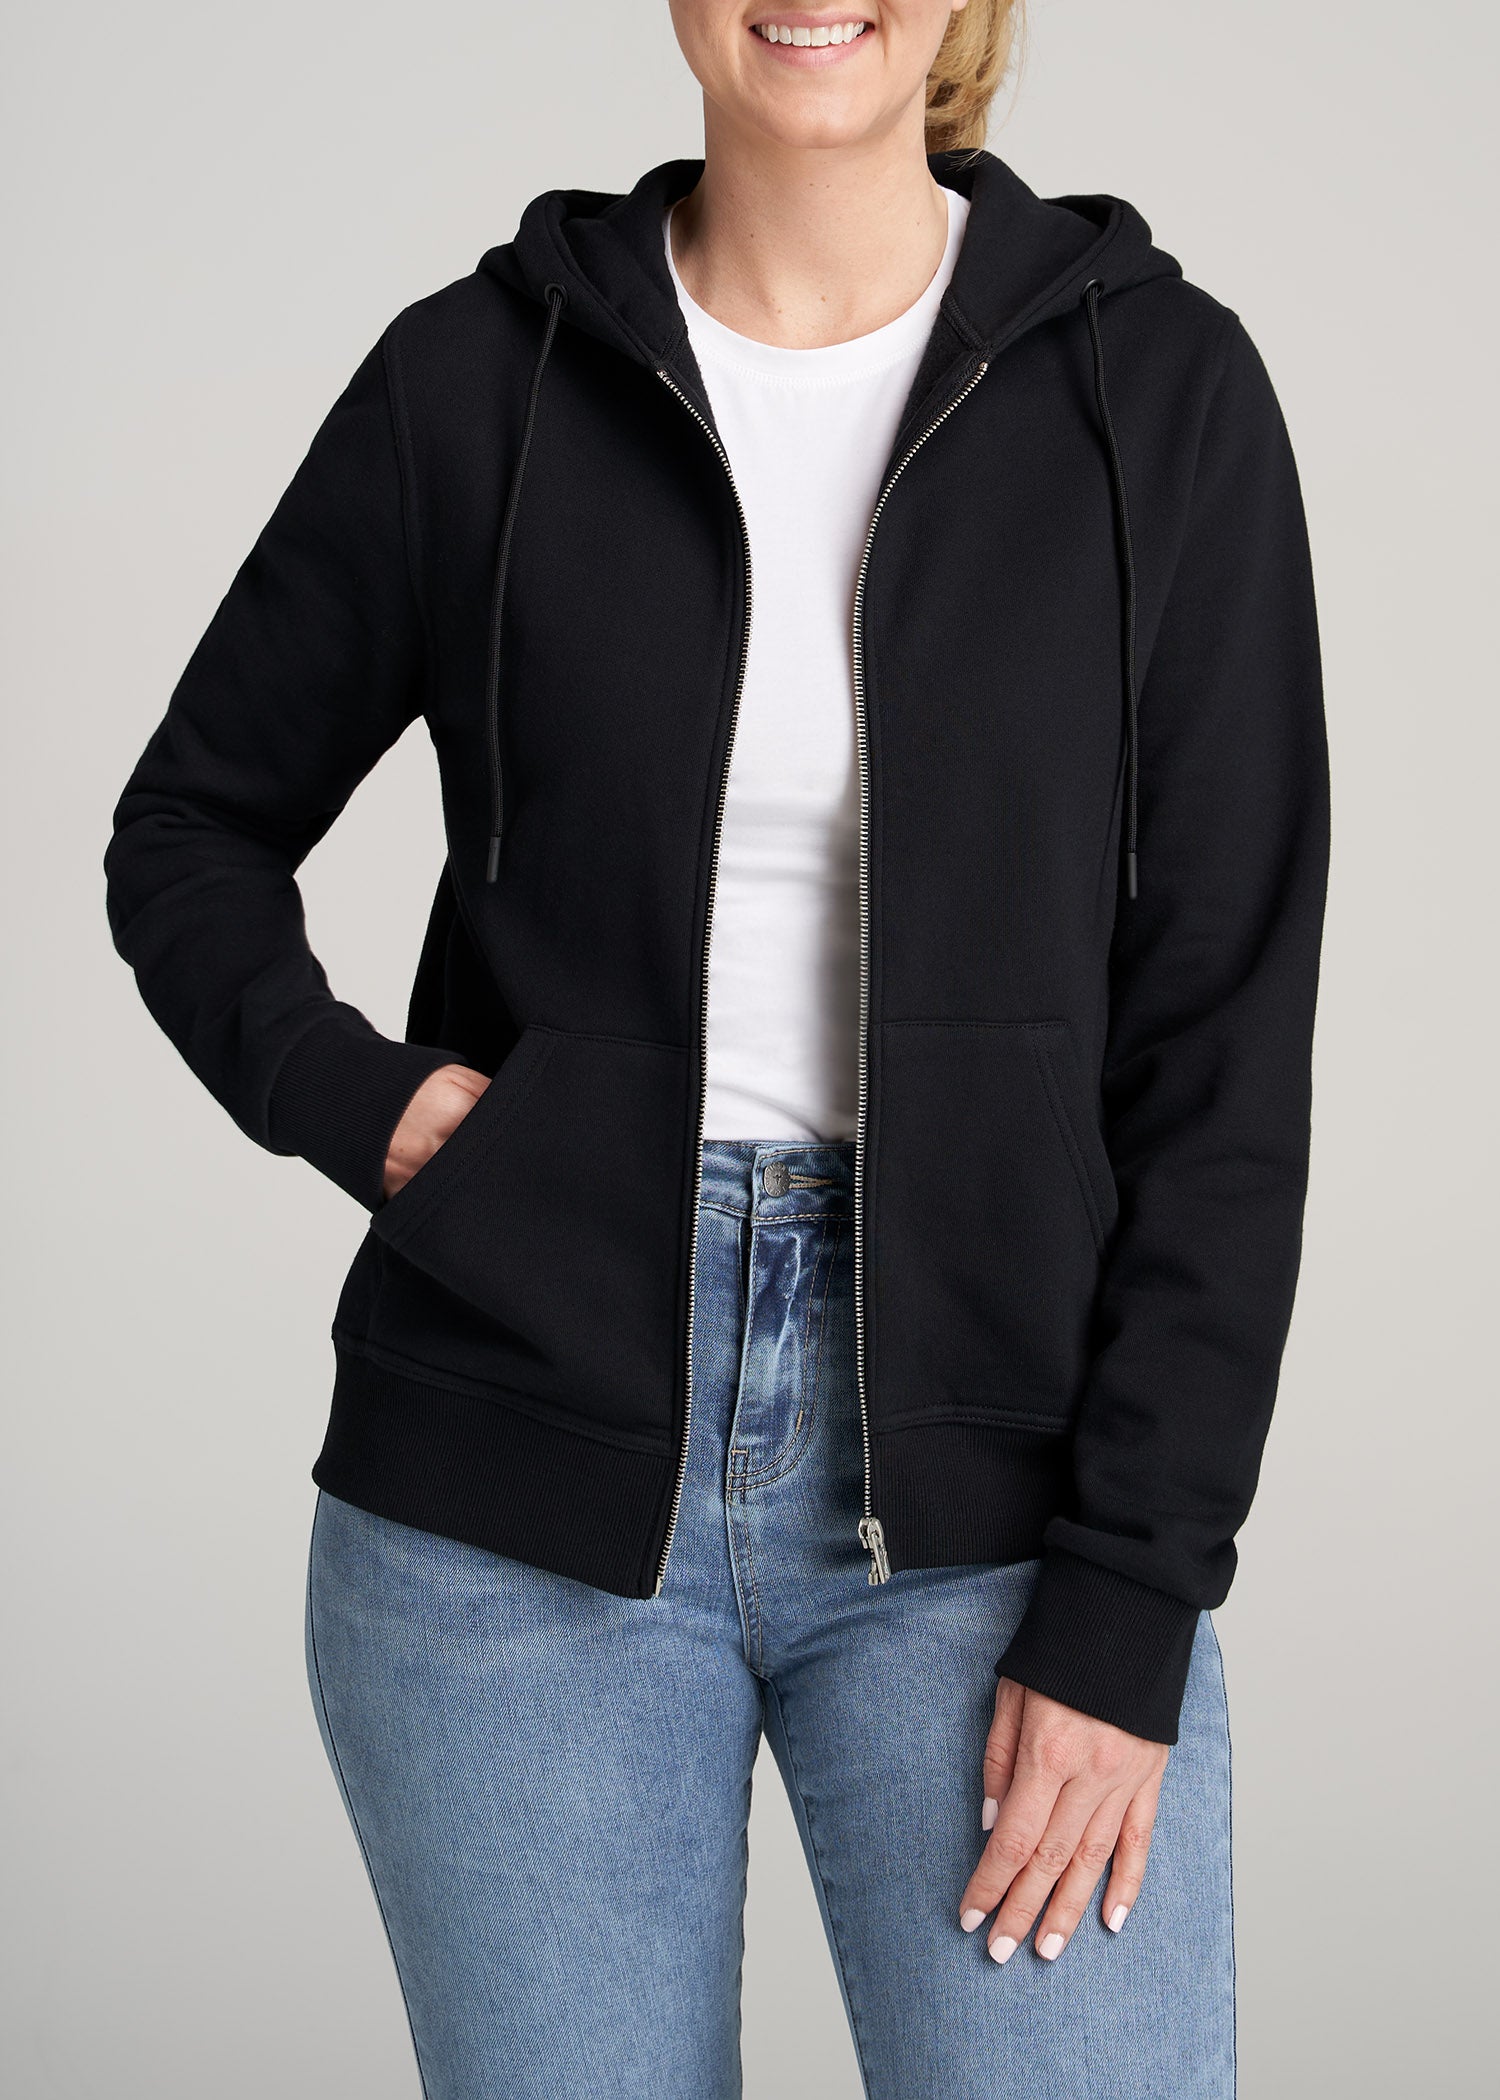 Wearever Fleece Full-Zip Women's Tall Hoodie in Black